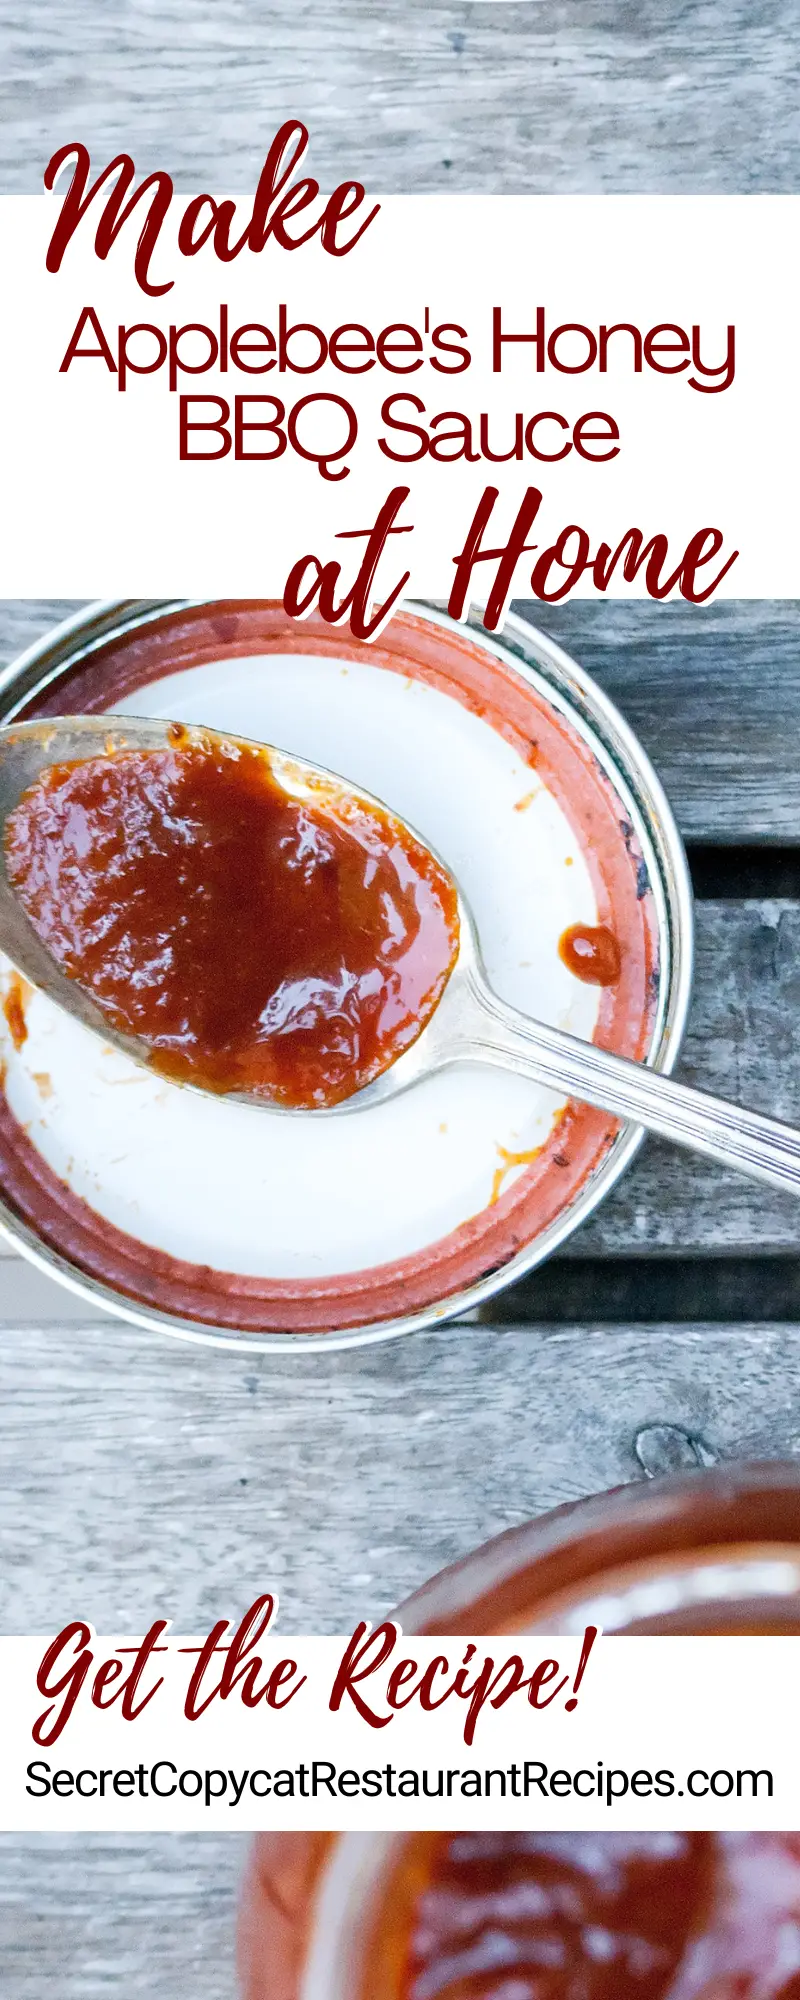 Applebee's Honey BBQ Sauce Recipe